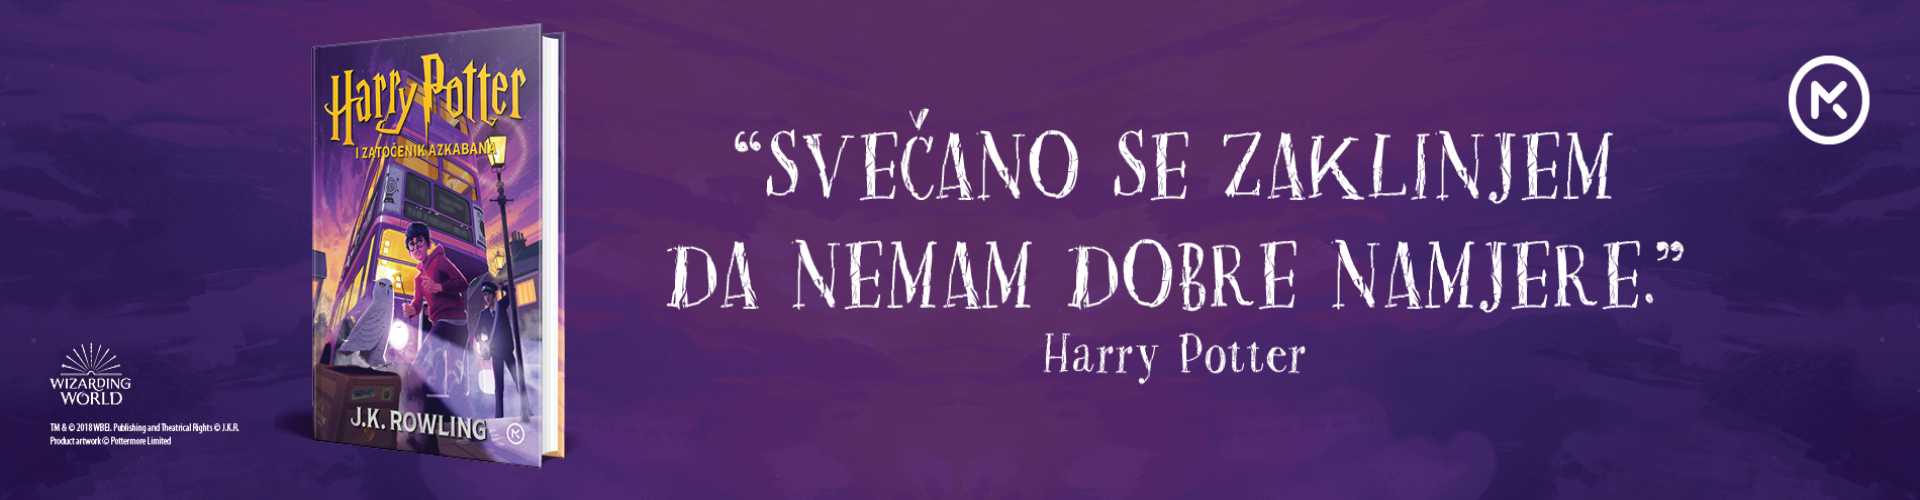 Harry Potter 3 1920 500